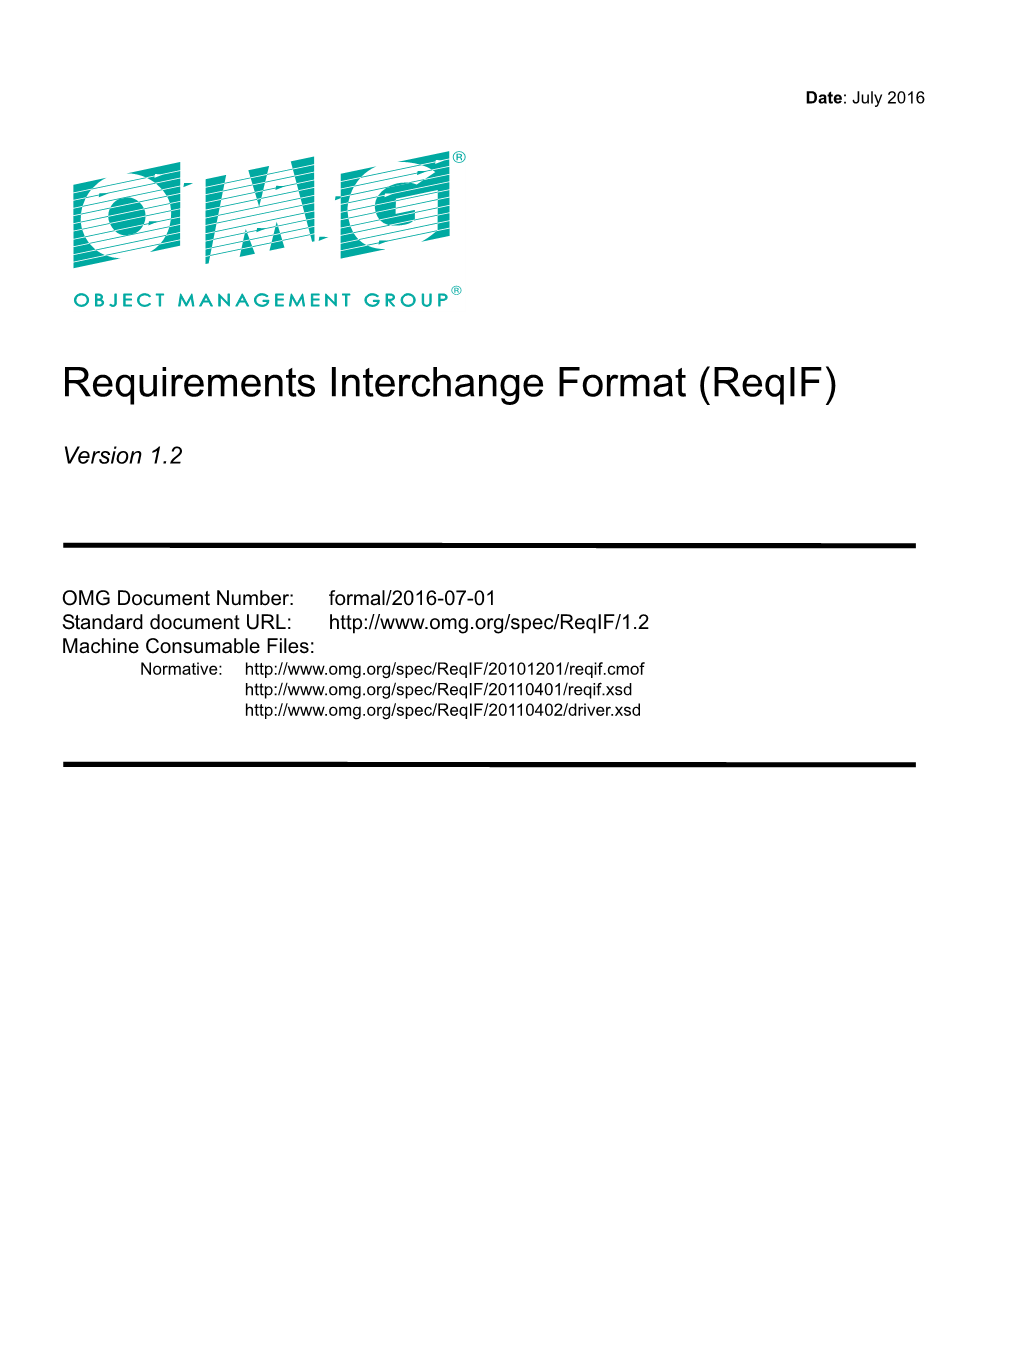 Requirements Interchange Format (Reqif)